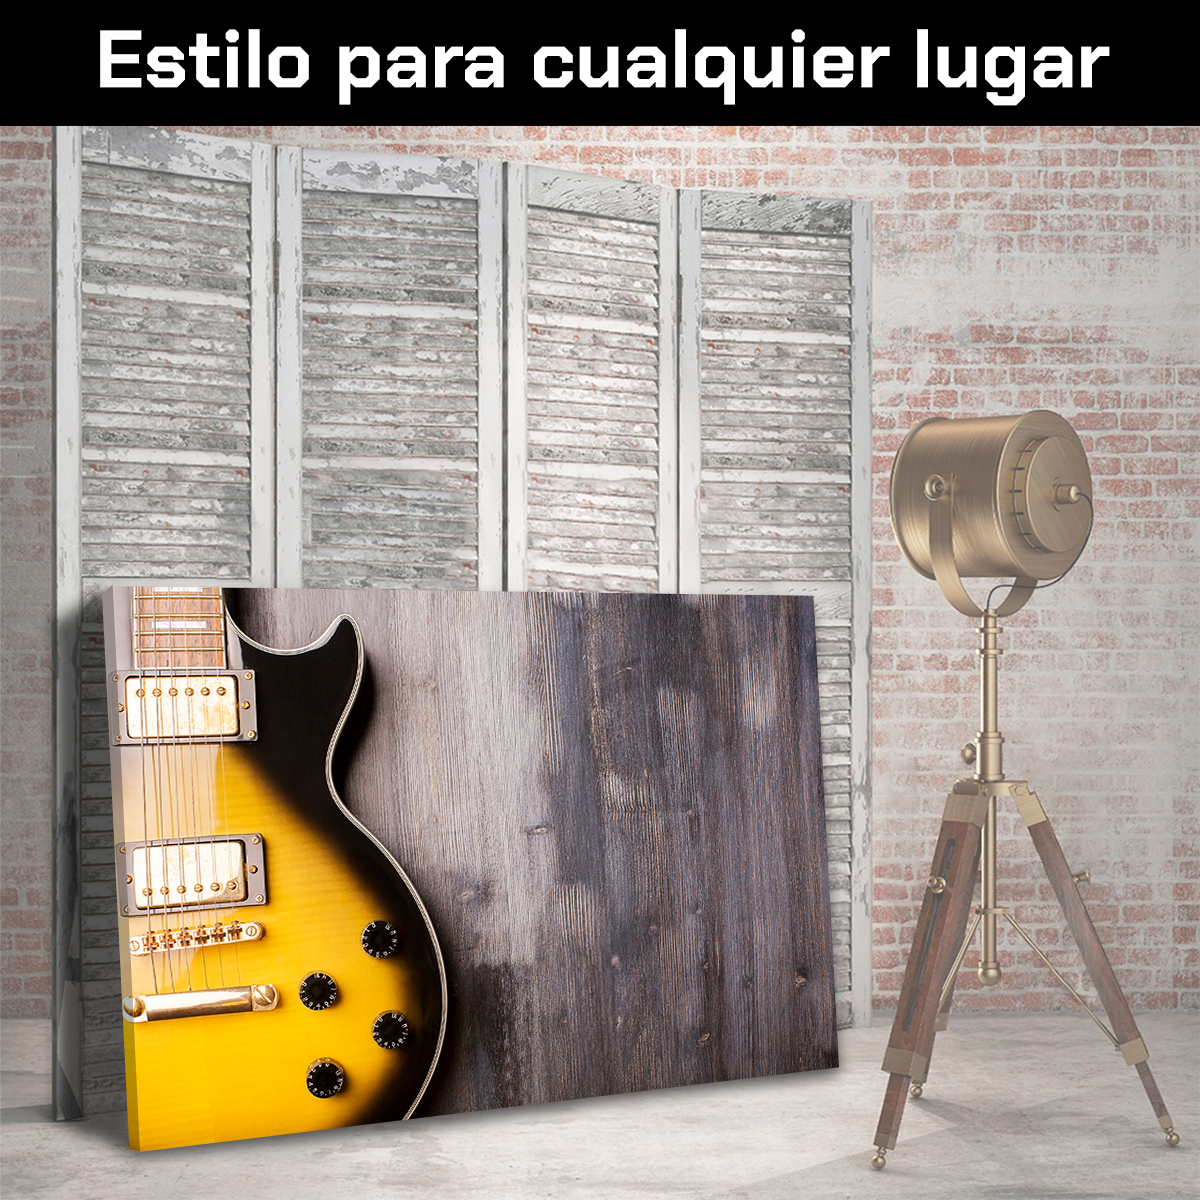 Guitarra Electrica En Madera